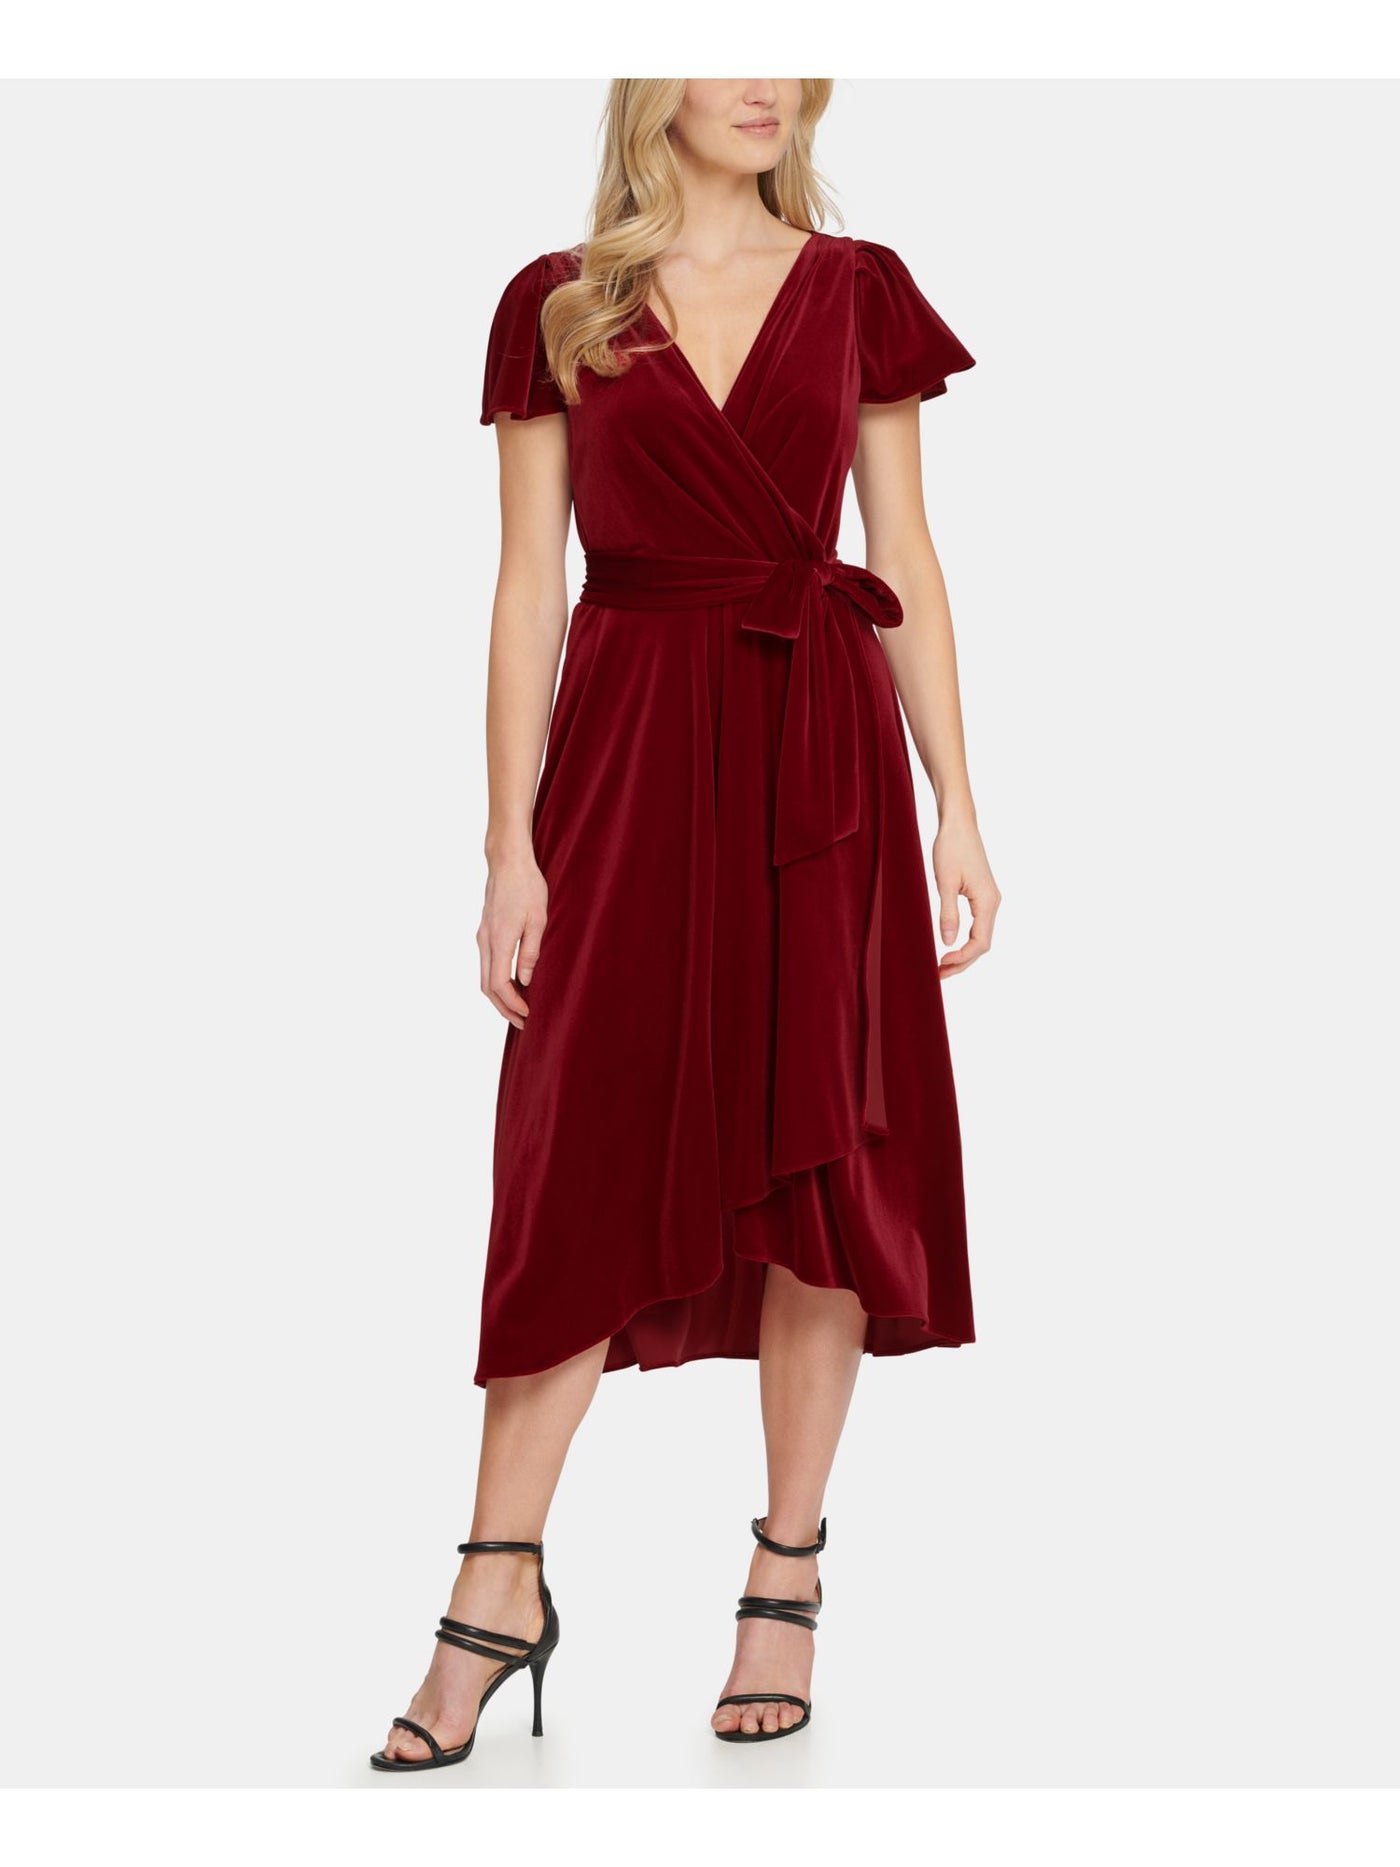 DKNY Womens Red Belted Zippered Velvet Cap Sleeve V Neck Tea-Length Evening Empire Waist Dress 8